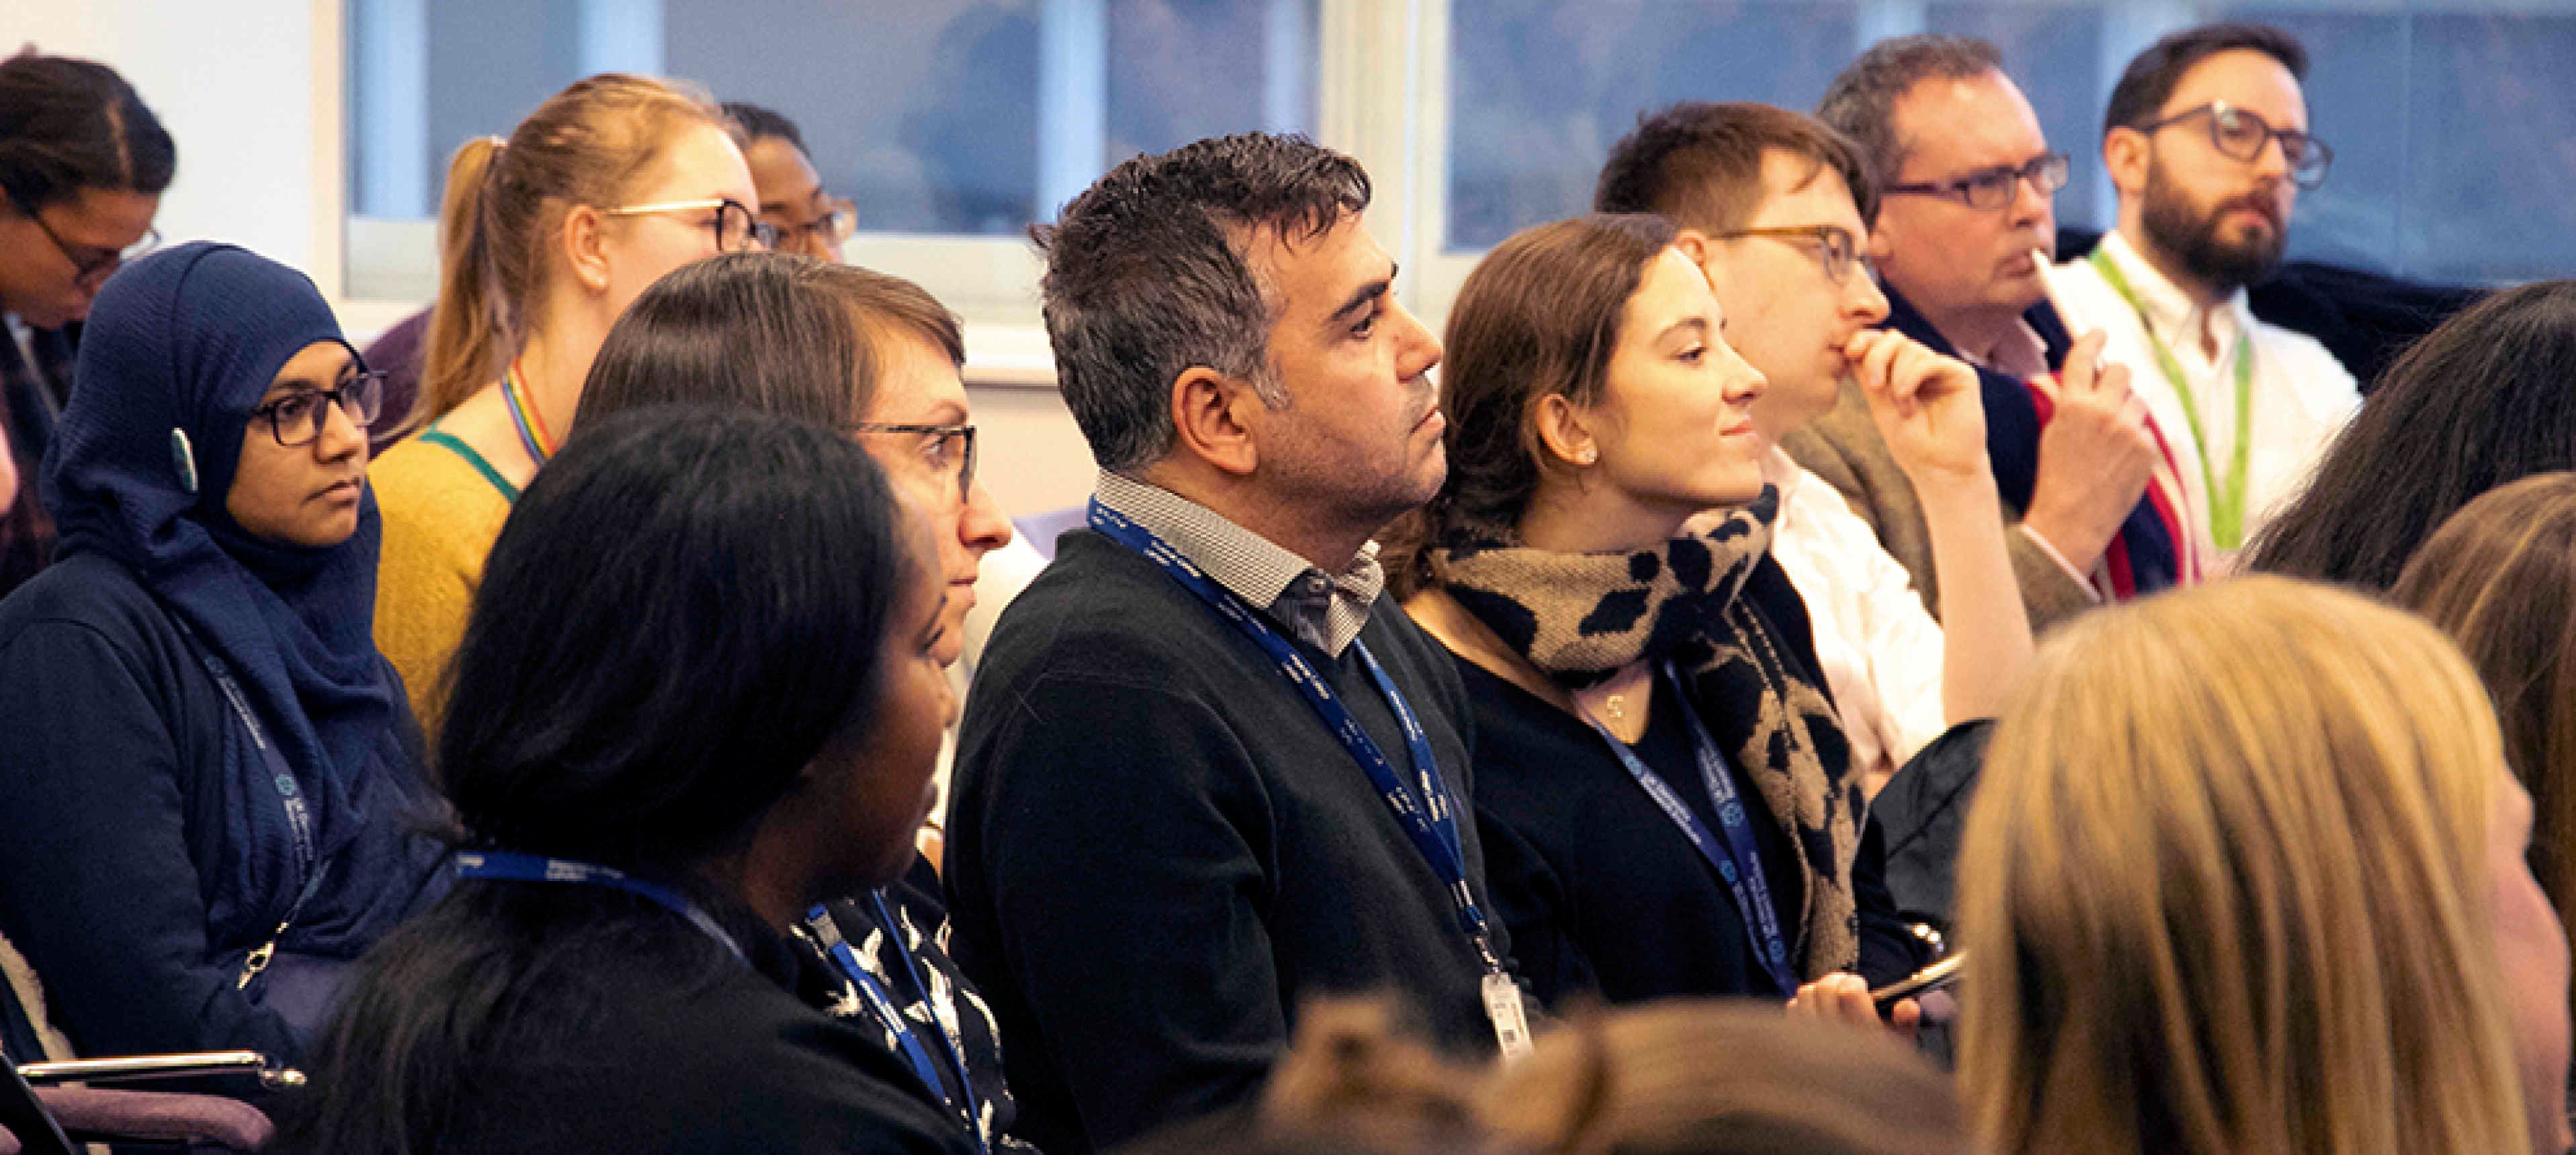 Attendees at an ImperialSAID seminar